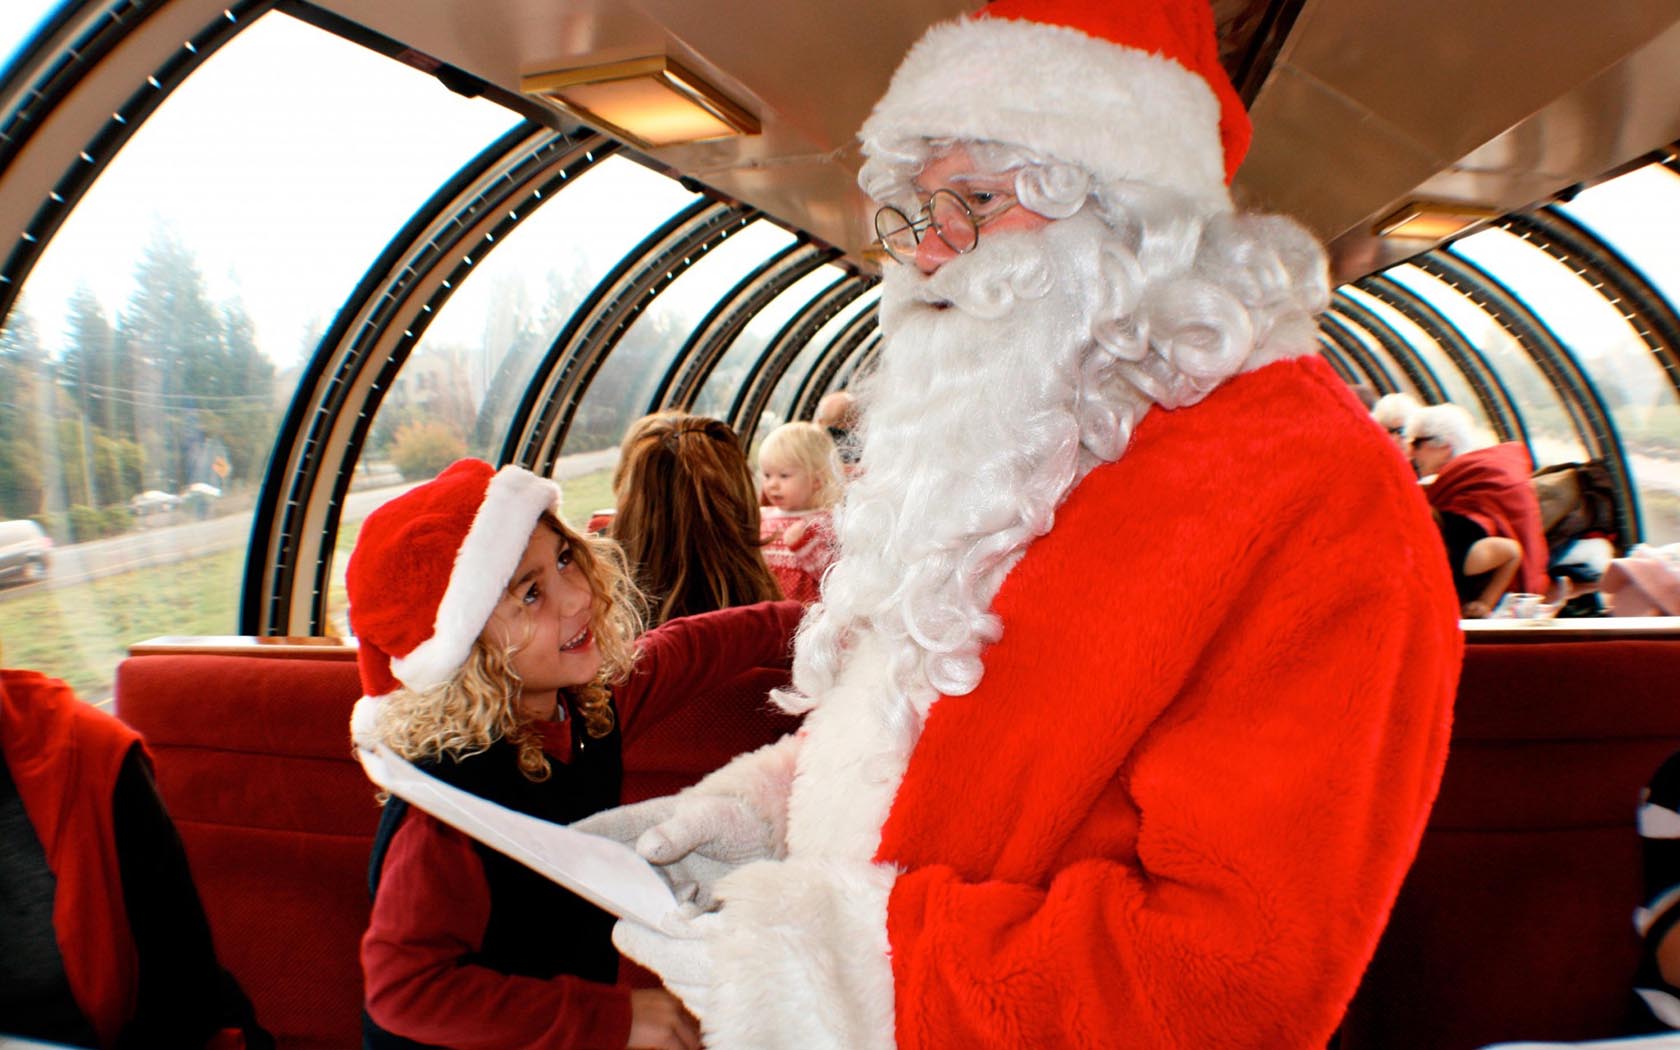 The Napa Valley Wine Train The Santa Train For Christmas